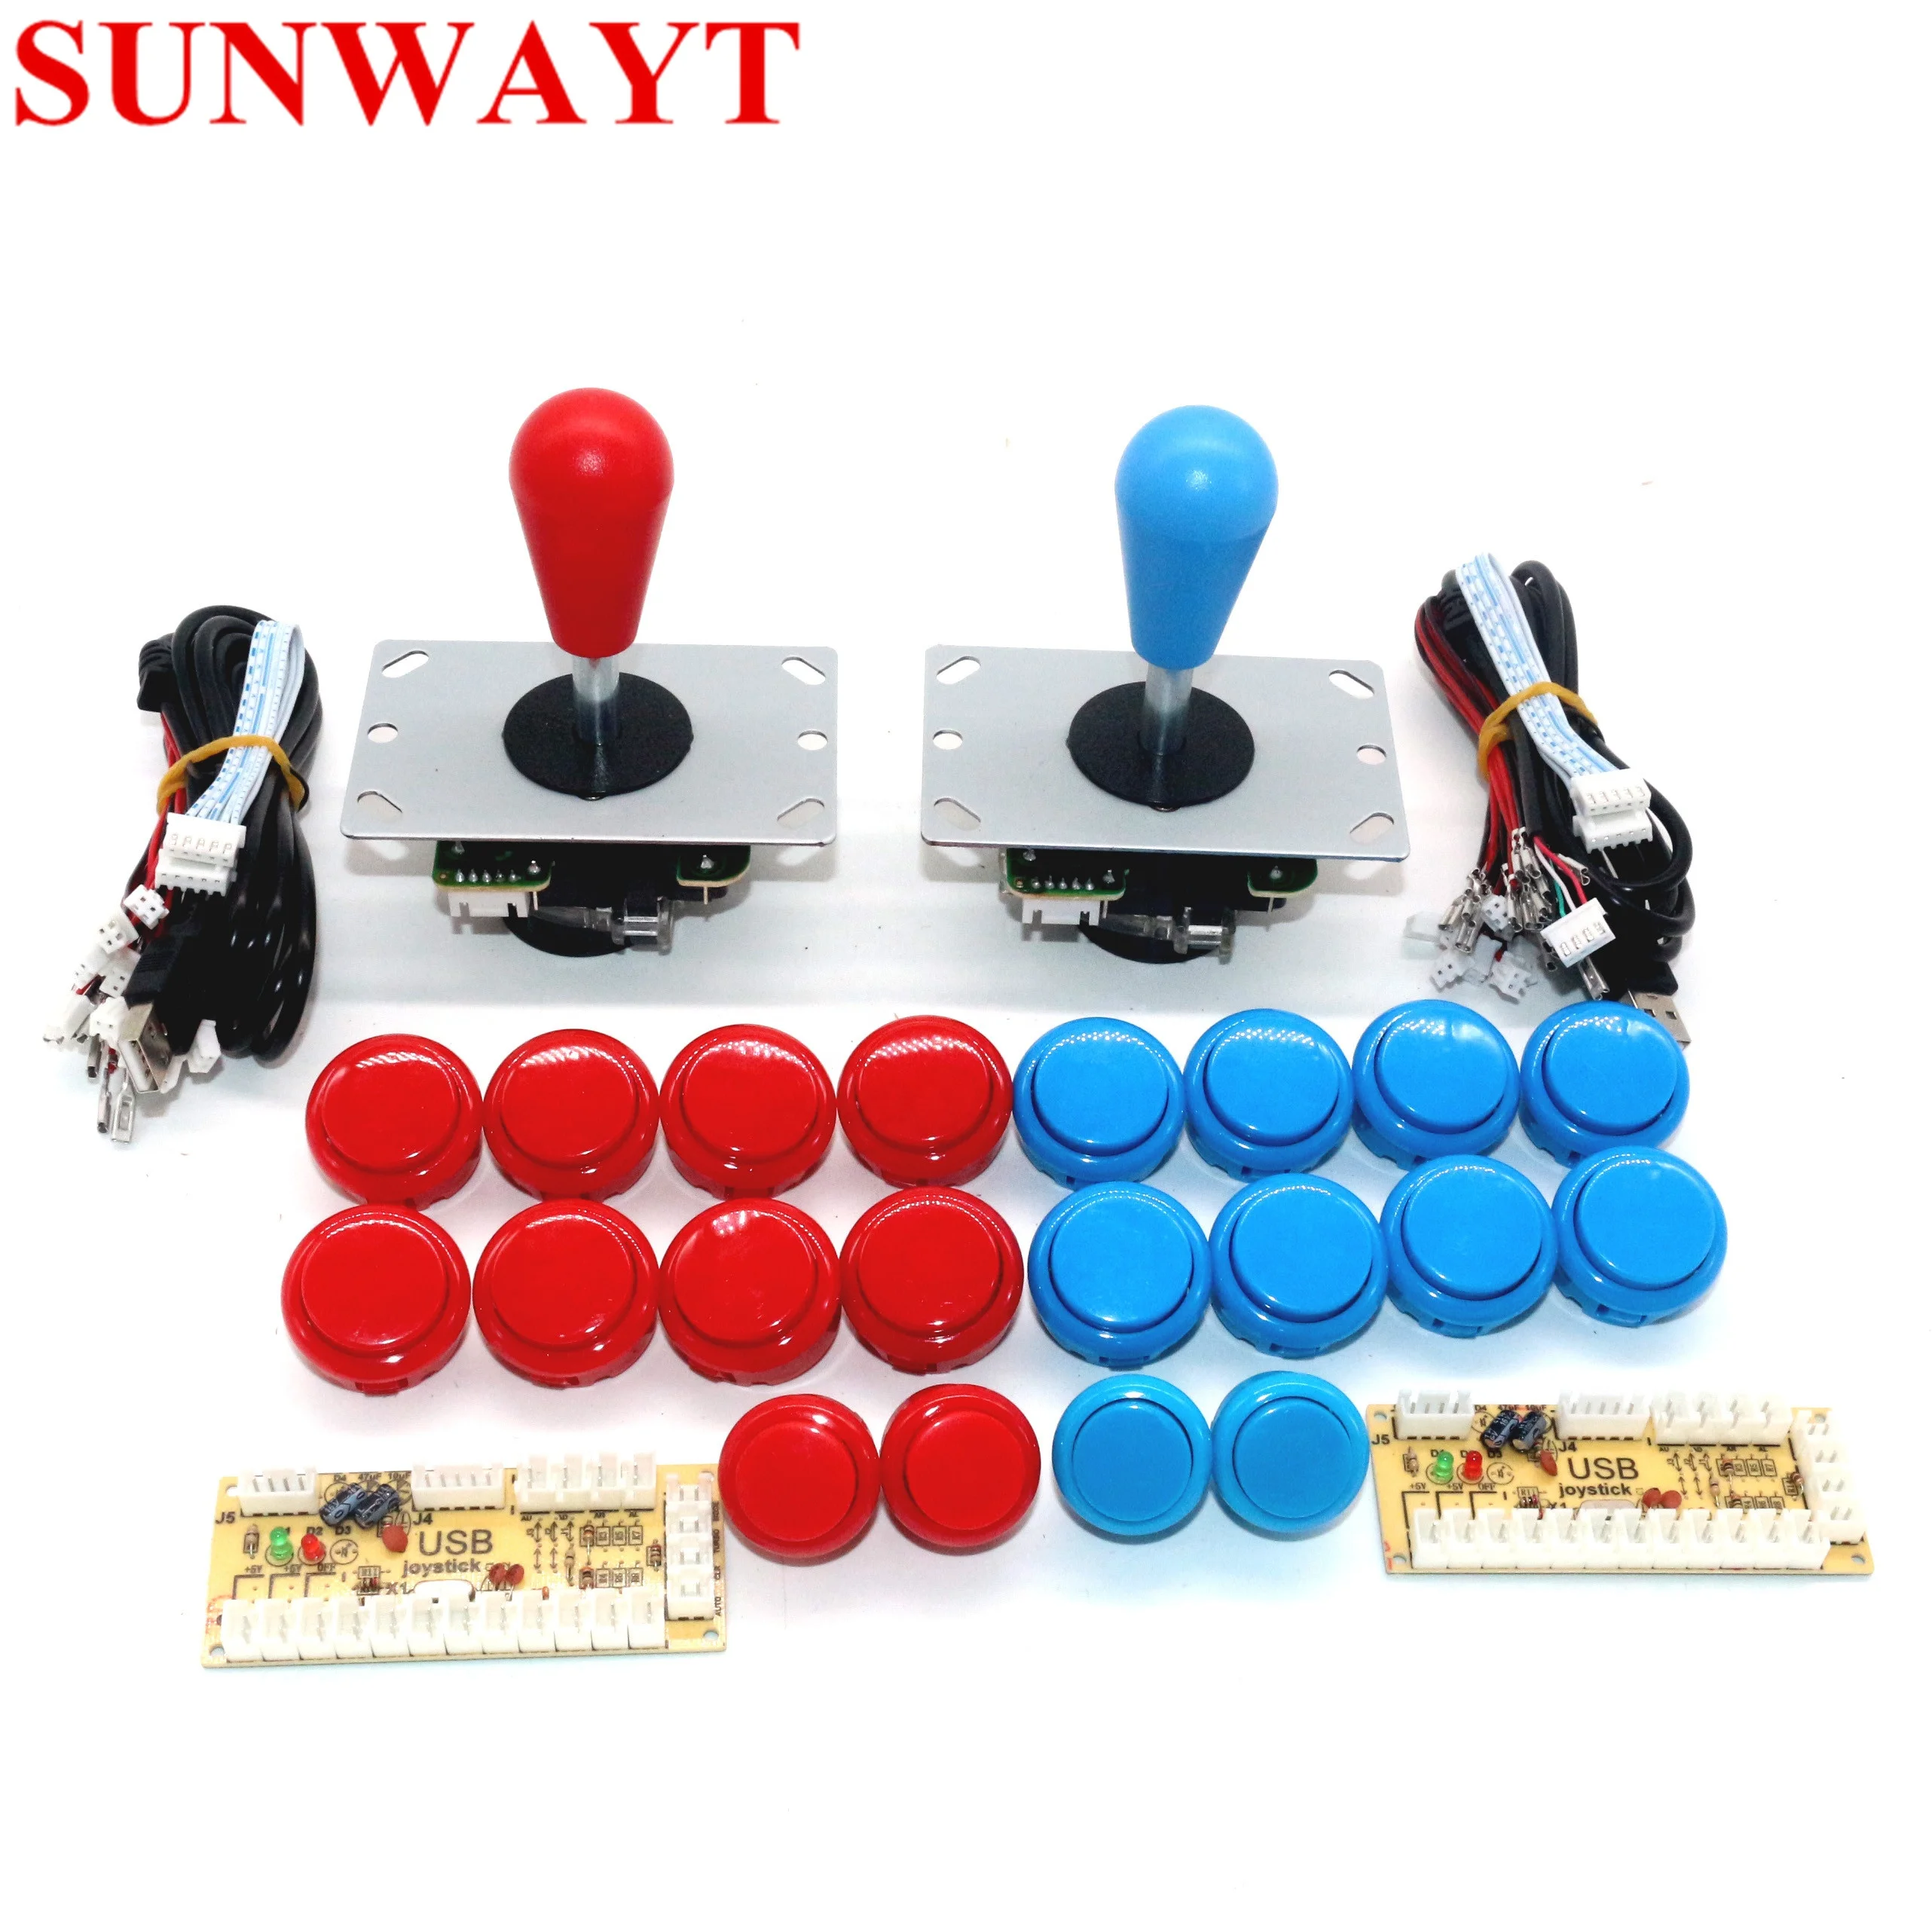 

24MM /30MM Arcade sanwa Buttons + 5Pin 4way/8way Arcade Joystick+1player Zero Delay USB Encoder Board DIY Arcade joystick Kit, Red/yellow/blue/green/white/black